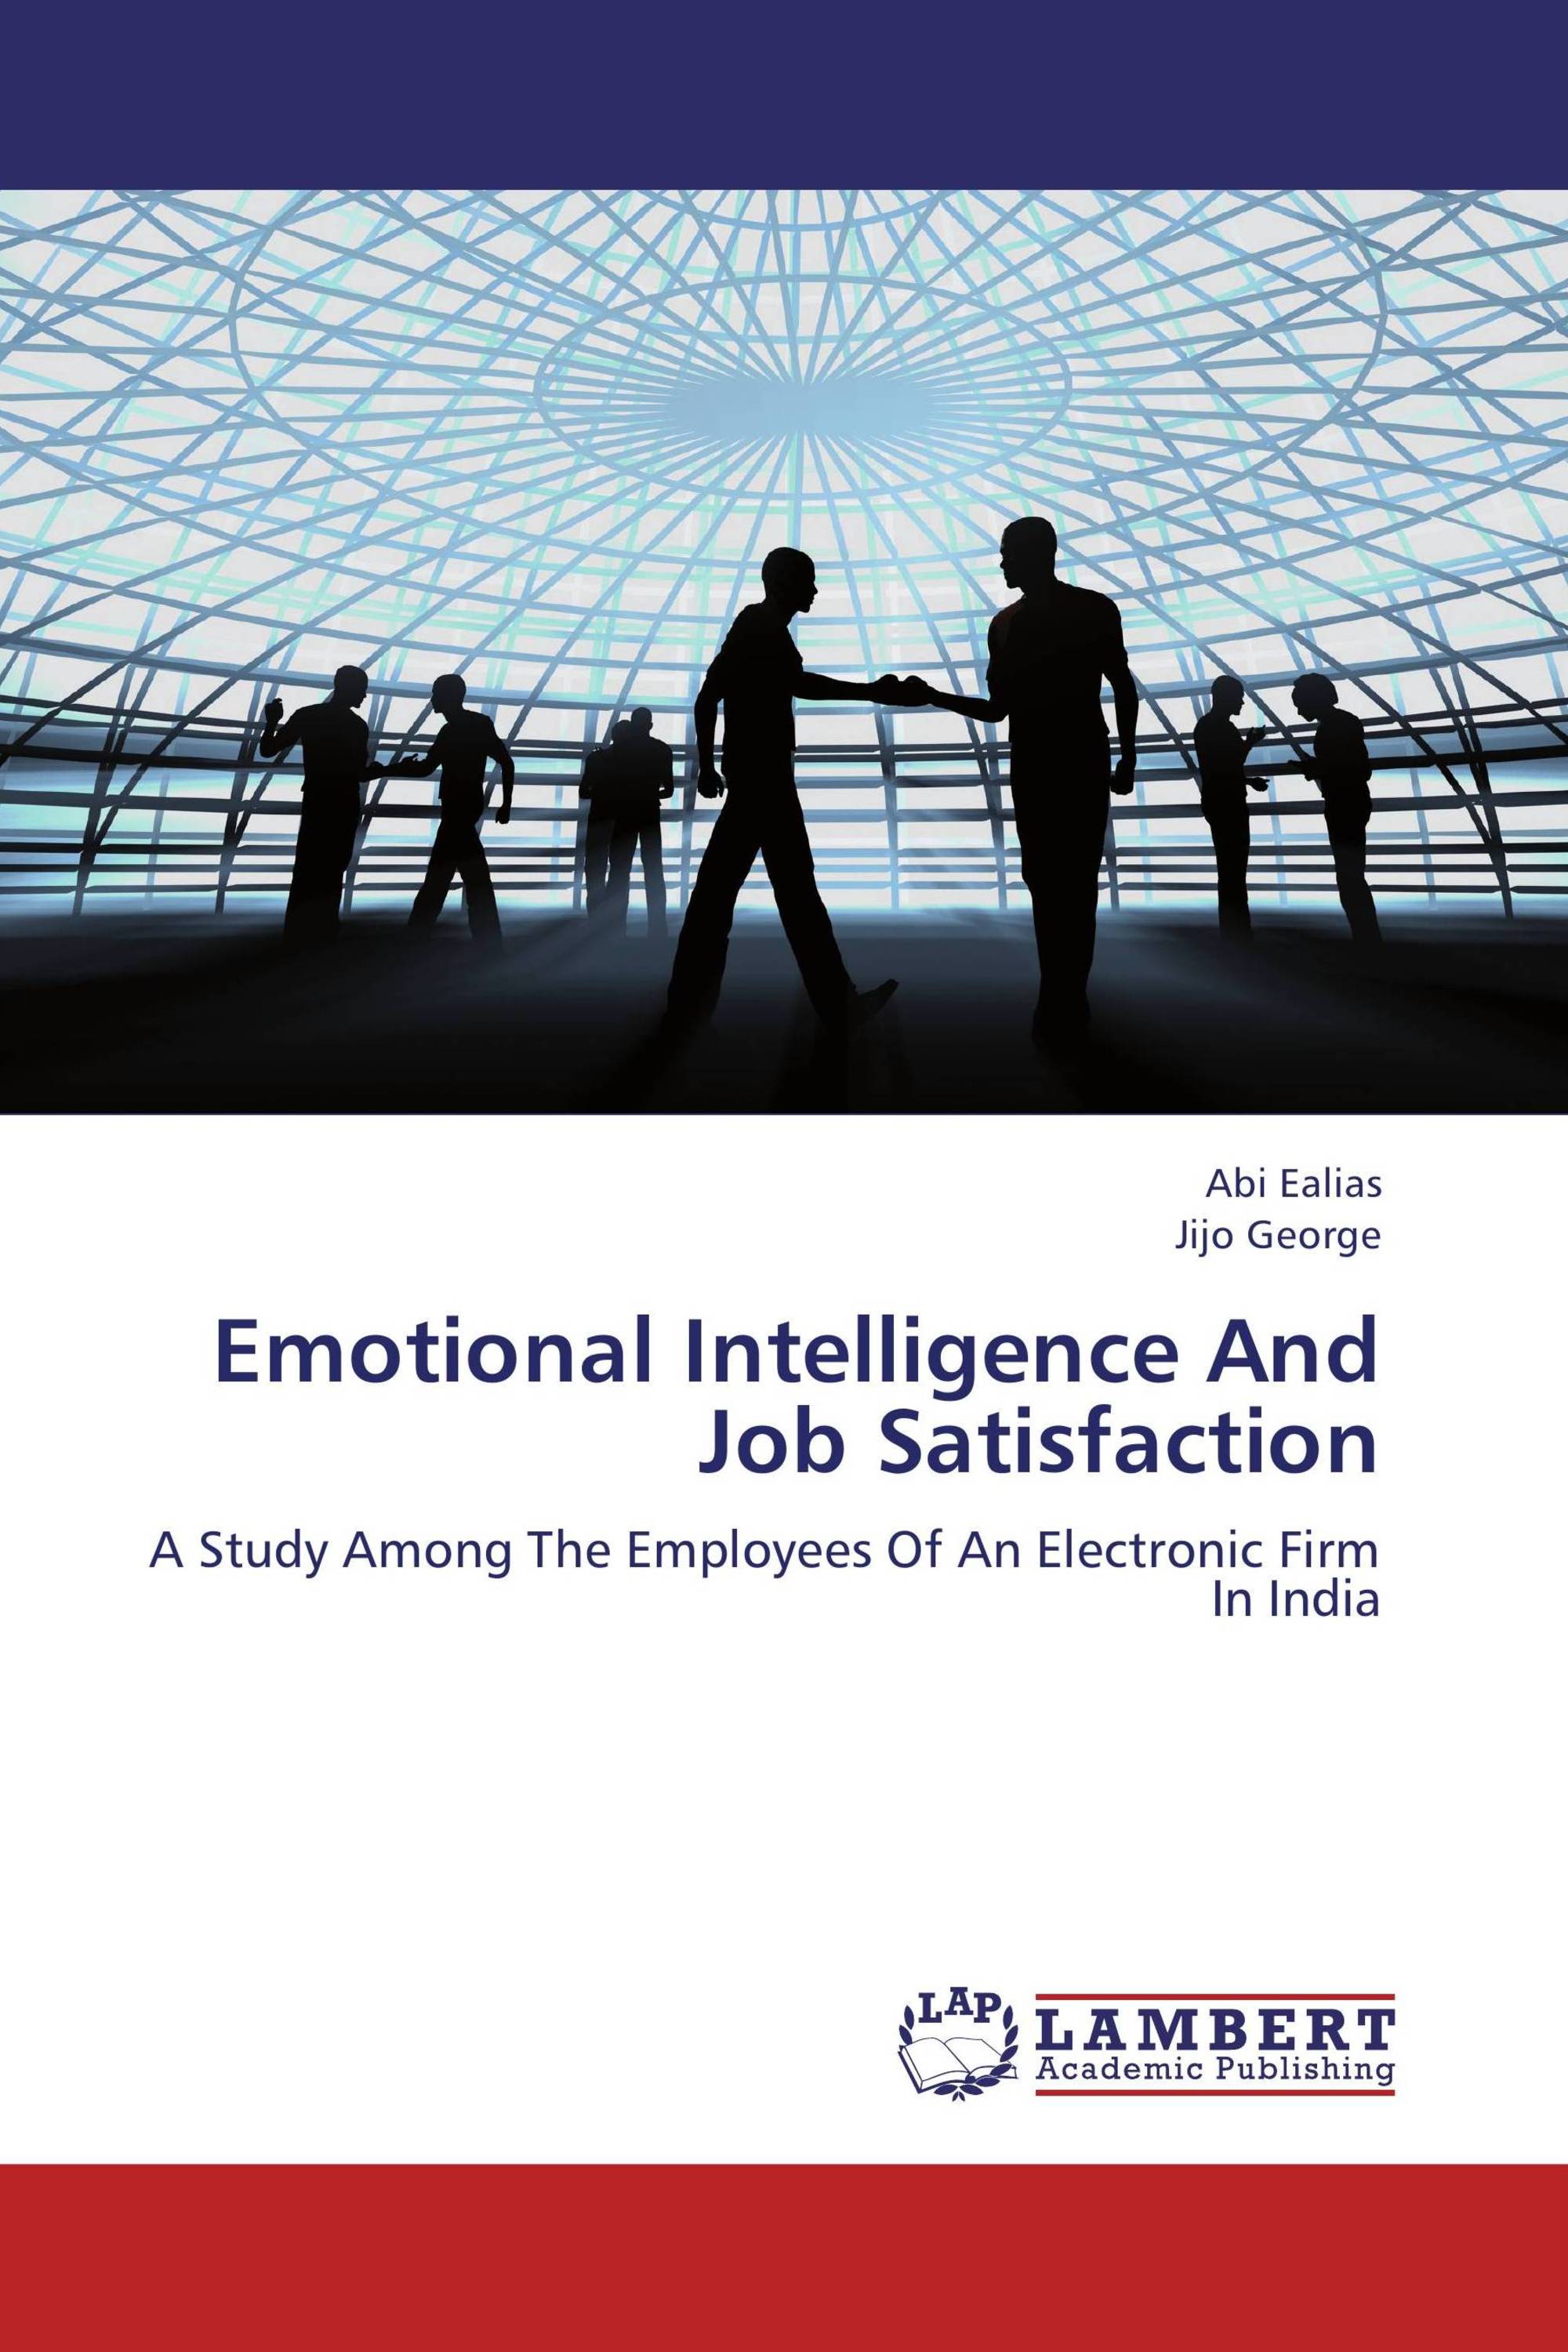 Review emotional intelligence job satisfaction